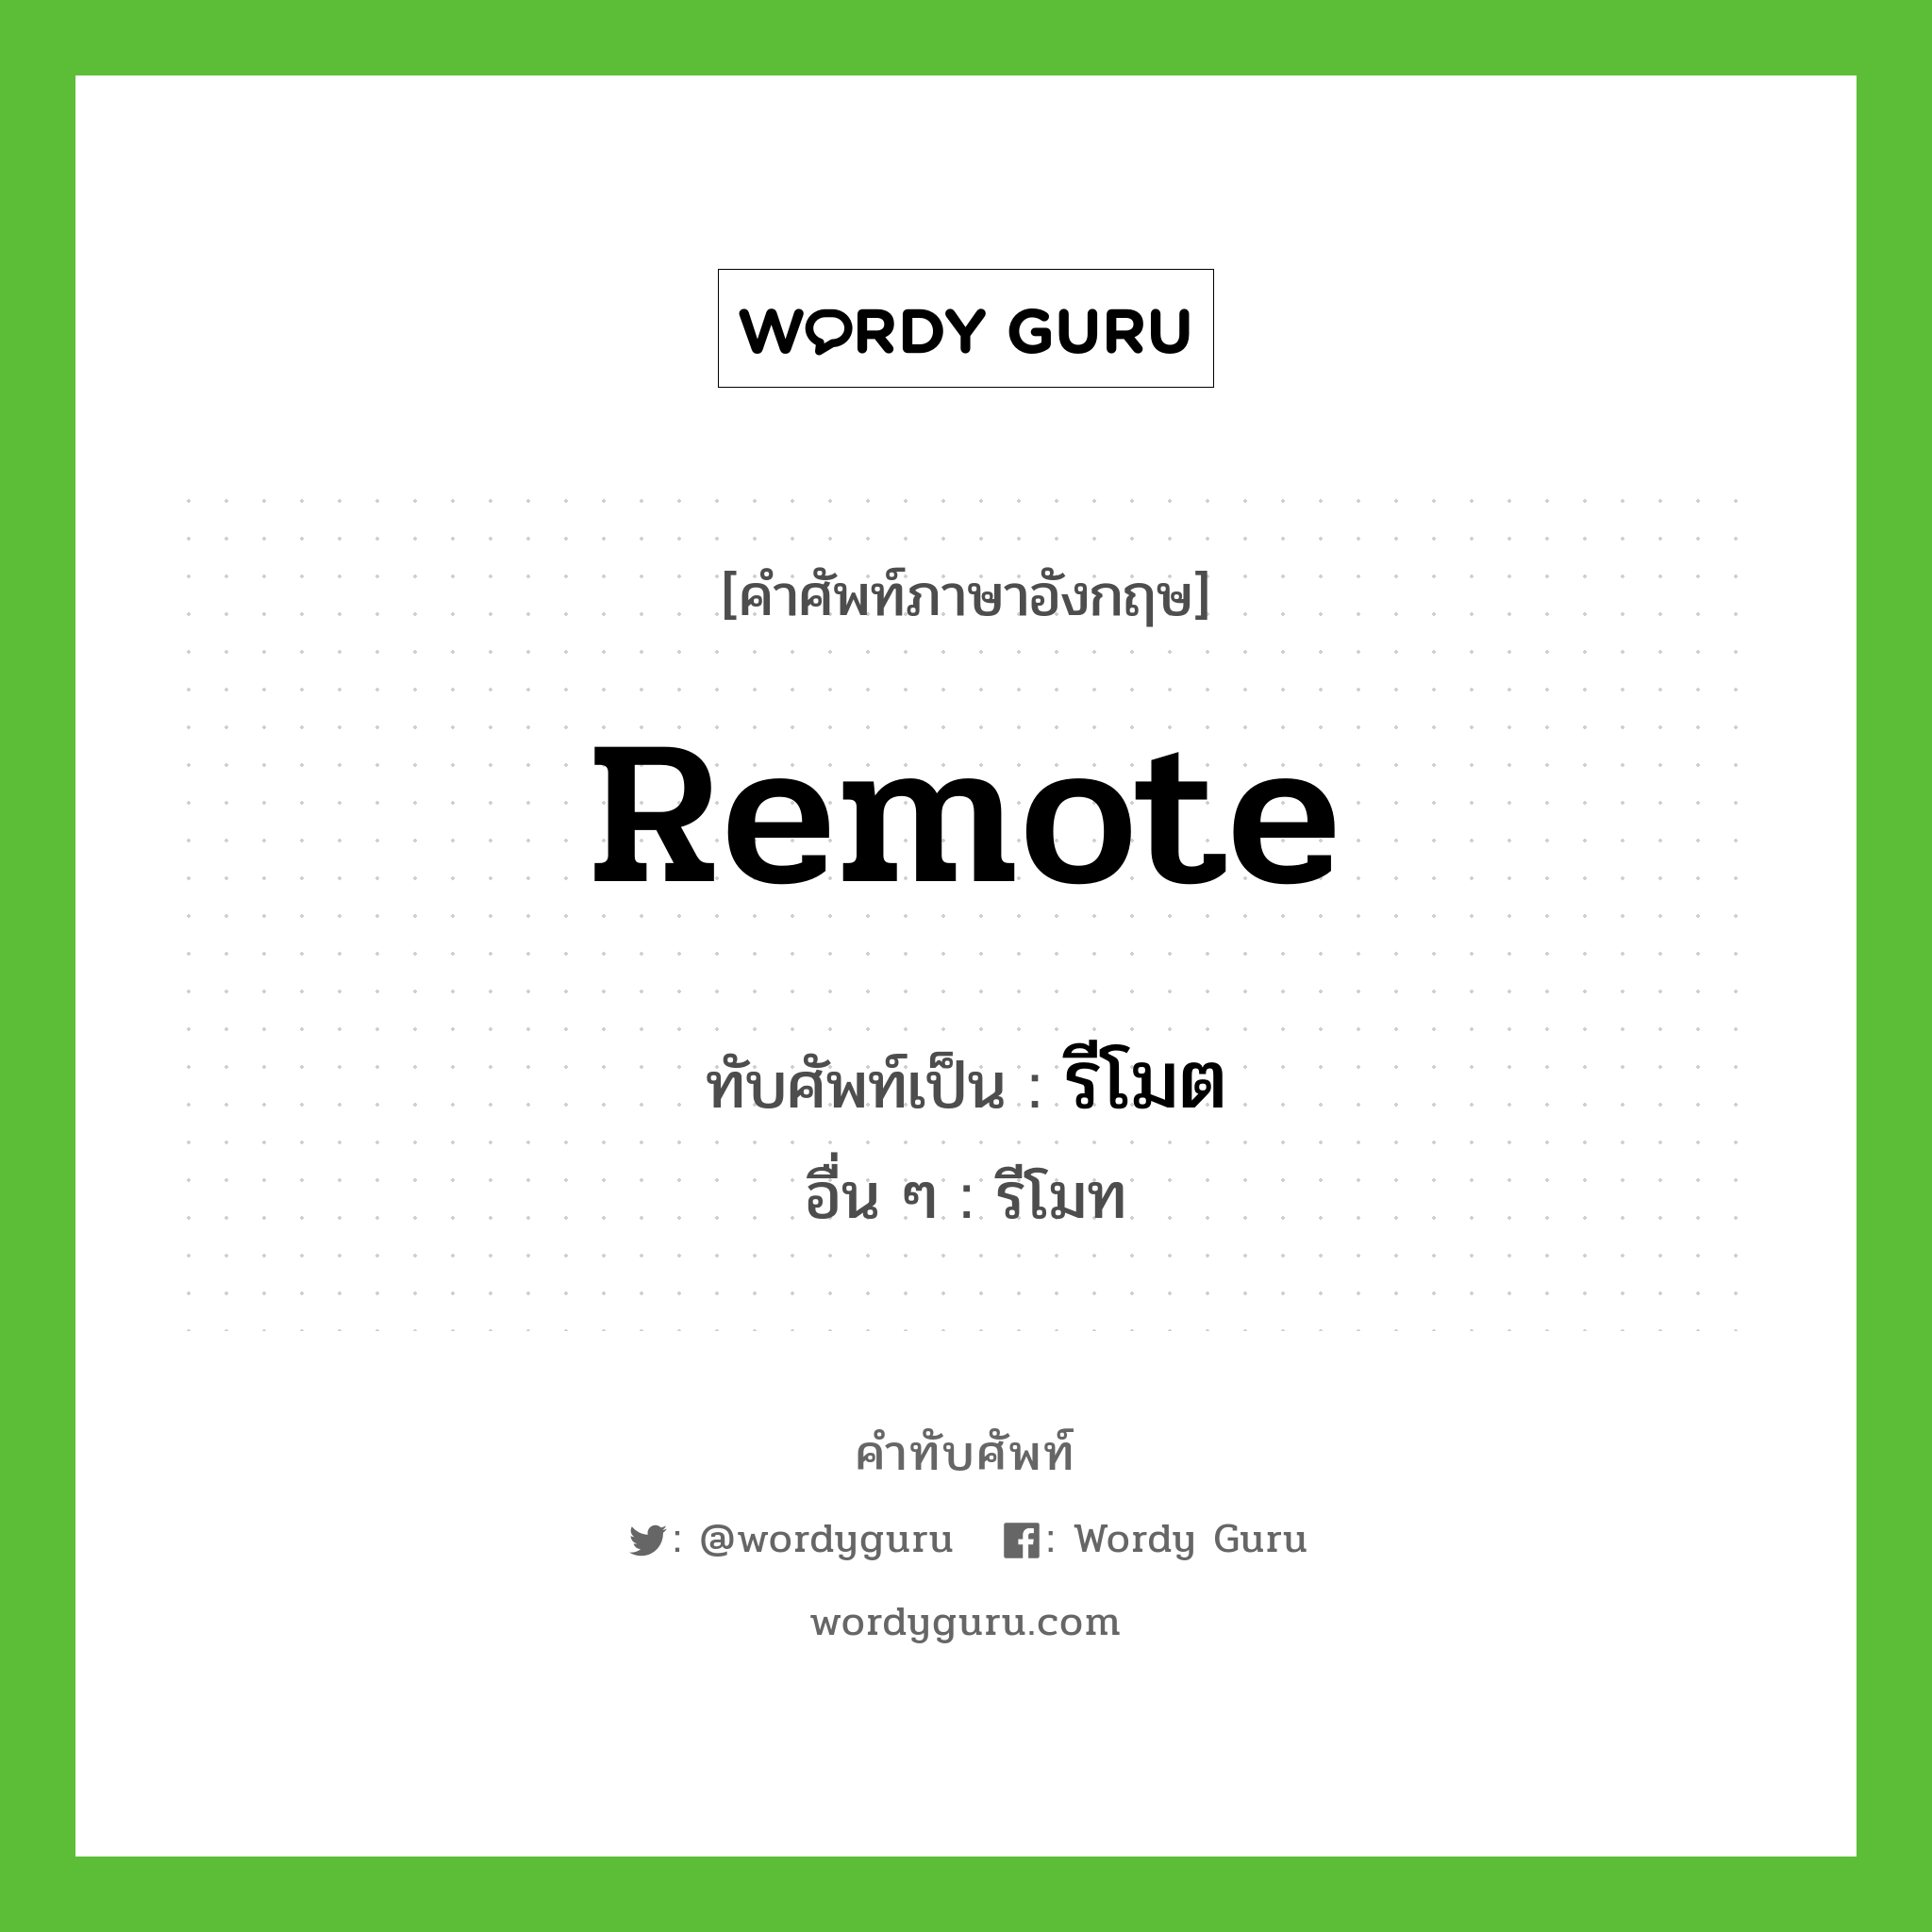 remote เขียนเป็นคำไทยว่าอะไร?, คำศัพท์ภาษาอังกฤษ remote ทับศัพท์เป็น รีโมต อื่น ๆ รีโมท